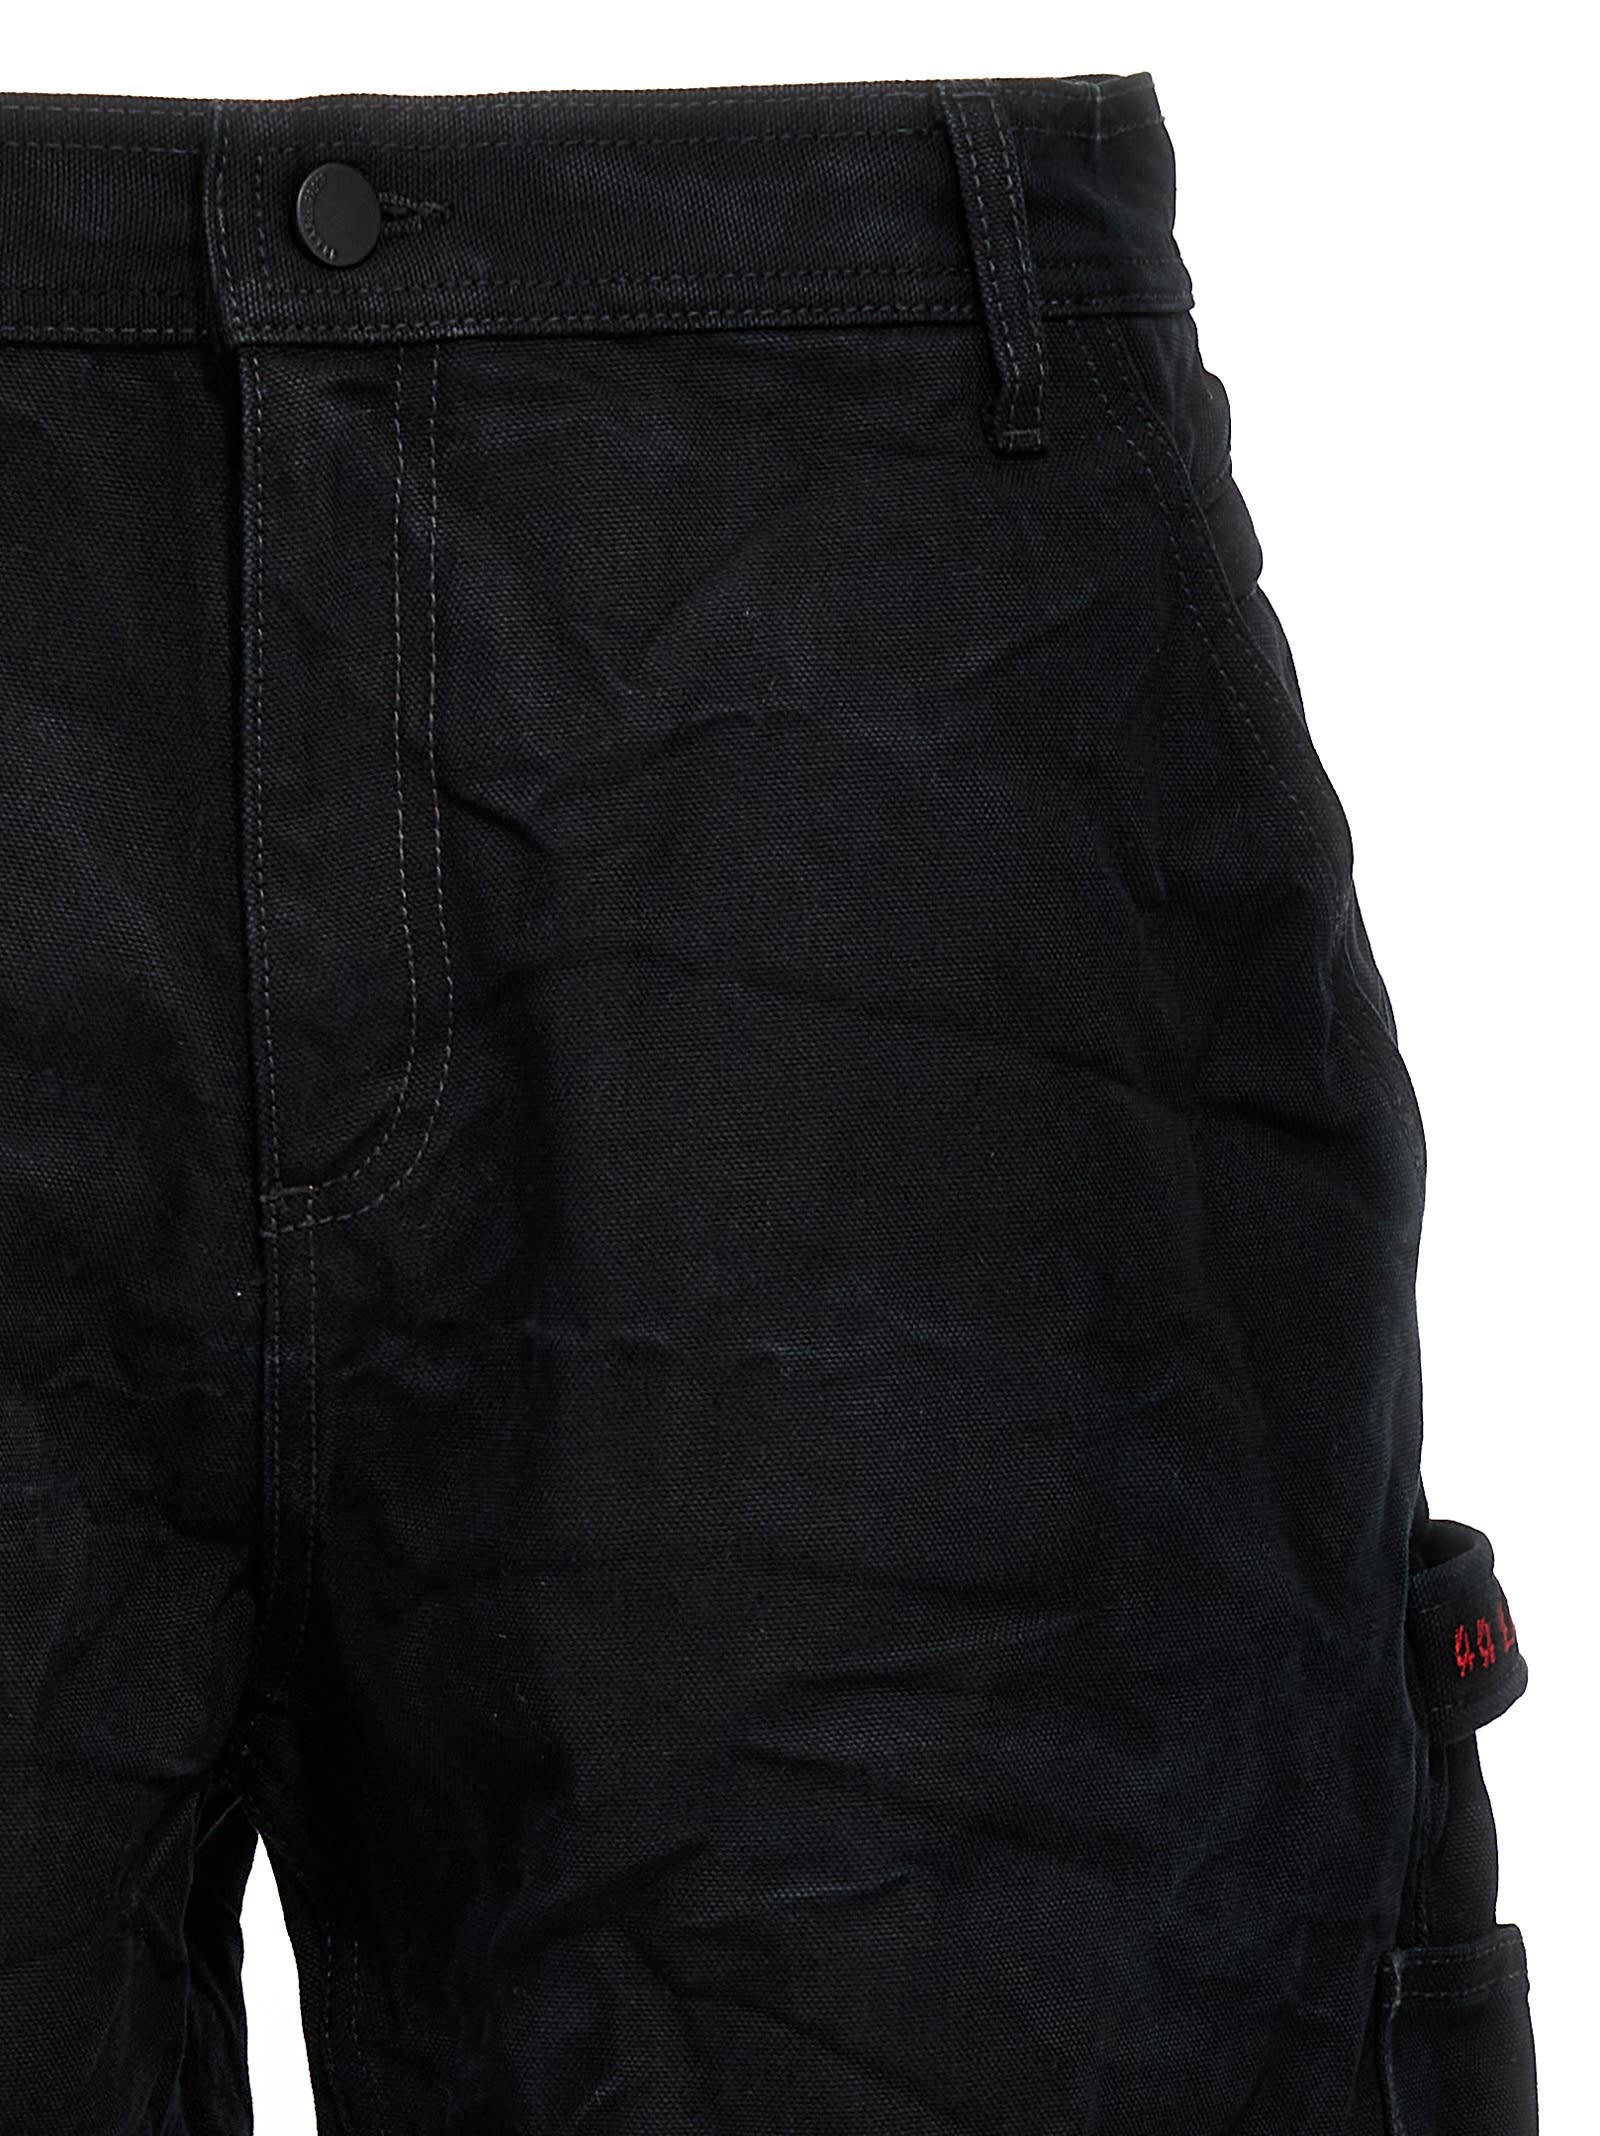 Shop 44 Label Group Hangover Carpenter Jeans In Black